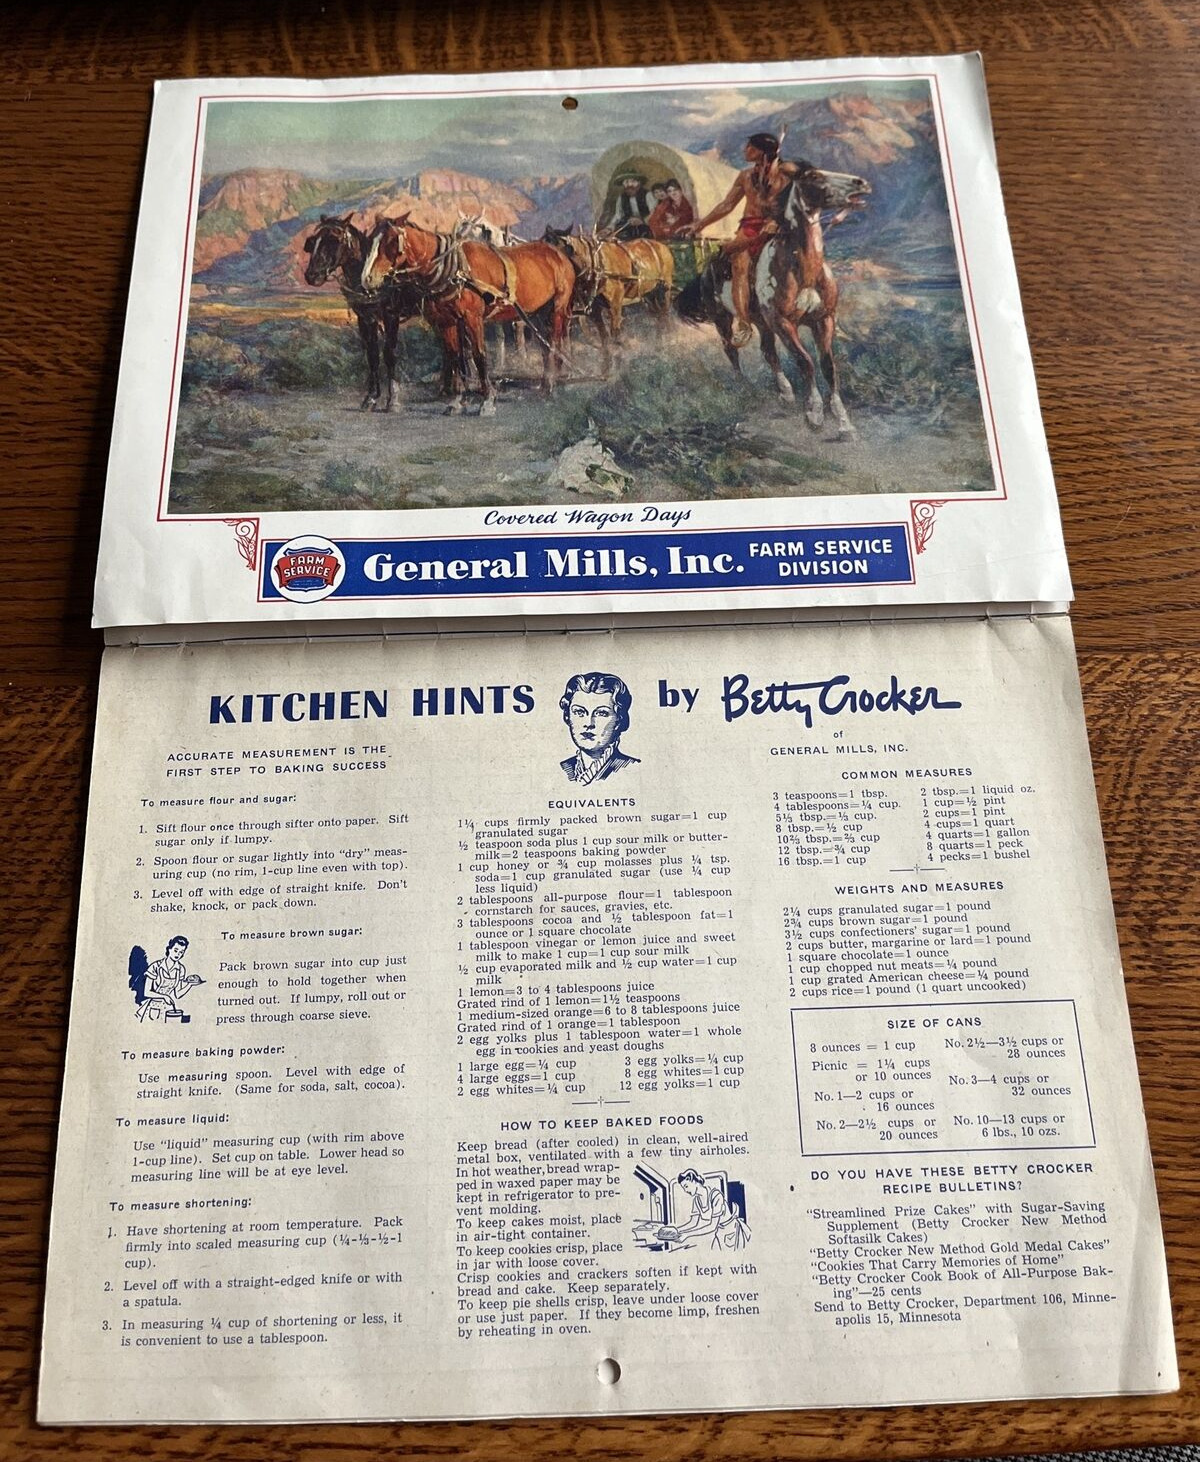 Vintage 1946 General Mills Farm Service Division Calendar Covered Wagon Days